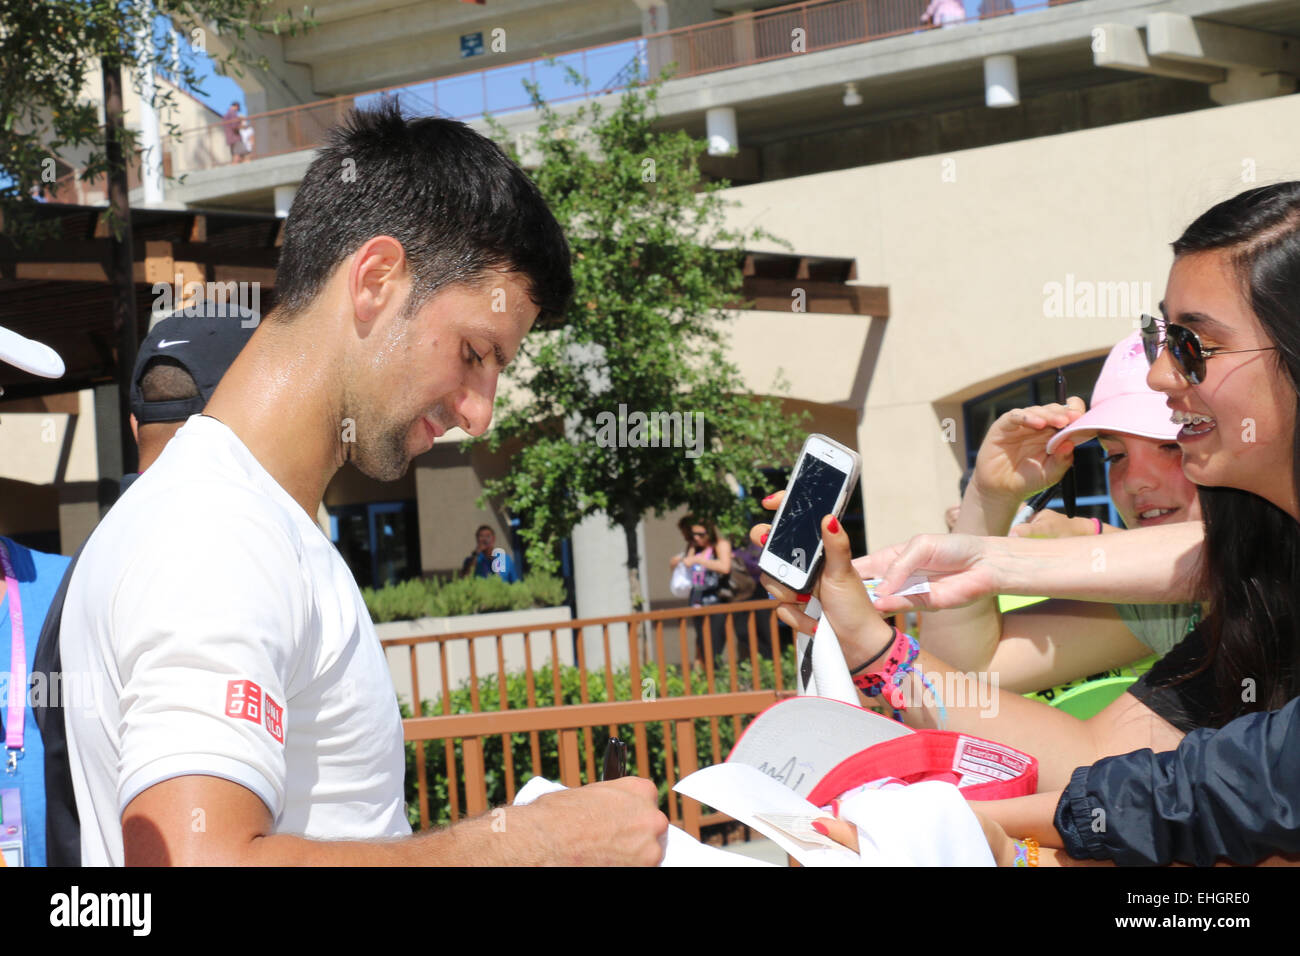 Indian Wells, California, 13 de marzo de 2015 ocupó el número uno el tenista serbio Novak Djokovic firma autógrafos en el BNP Paribas Open. Crédito: Lisa Werner/Alamy Live News Foto de stock